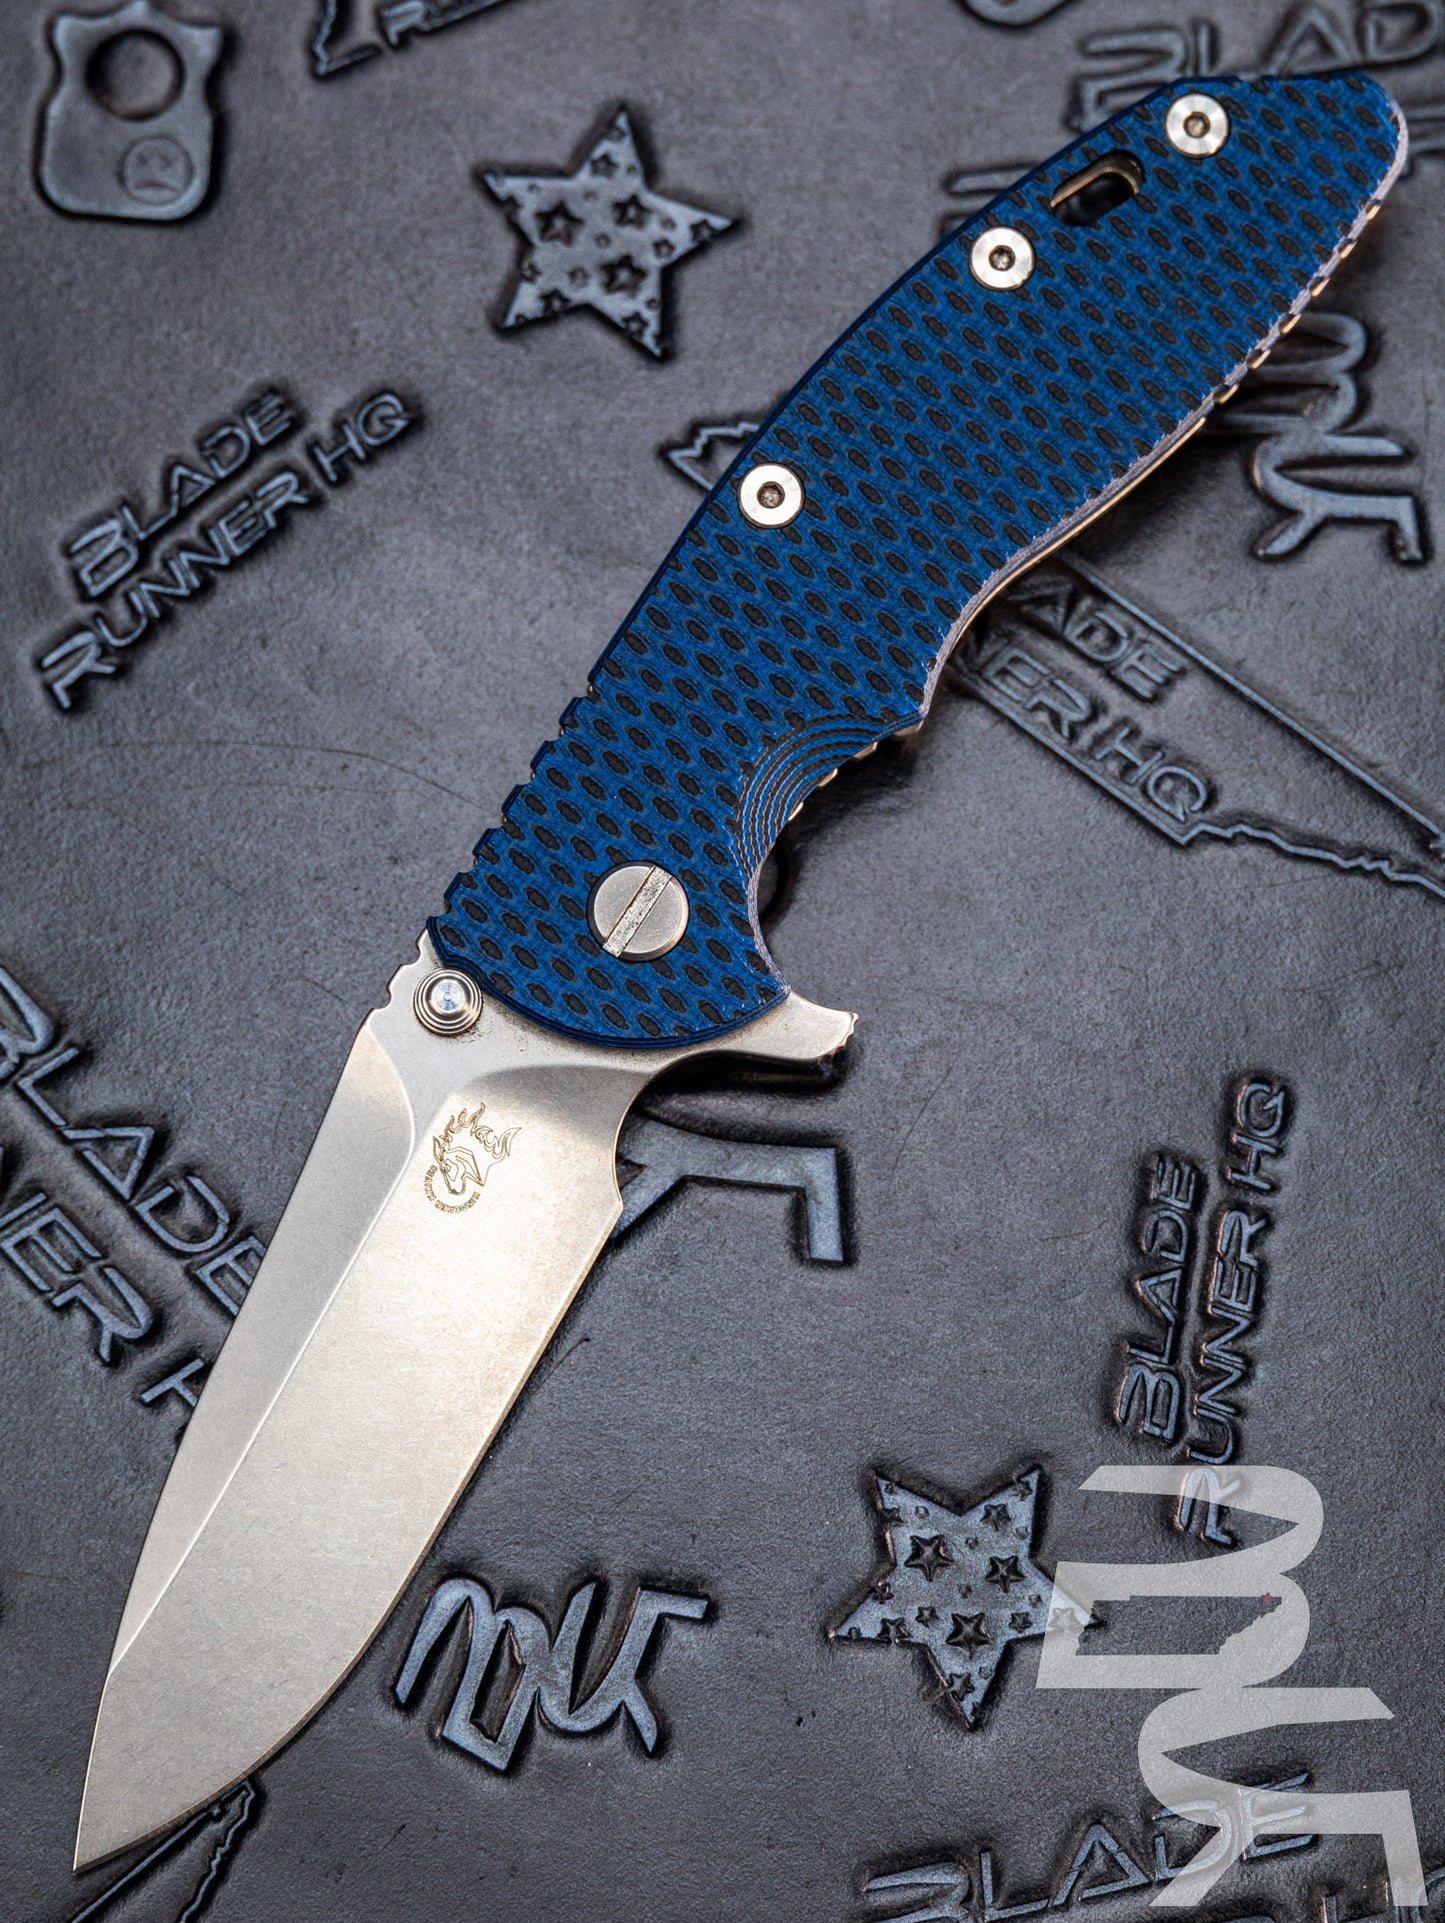 Pre Owned (No Box) HINDERER KNIVES XM-18 3.0″ M390 SWEDGED SPEAR TRI-WAY STONEWASH BLUE/BLACK G10